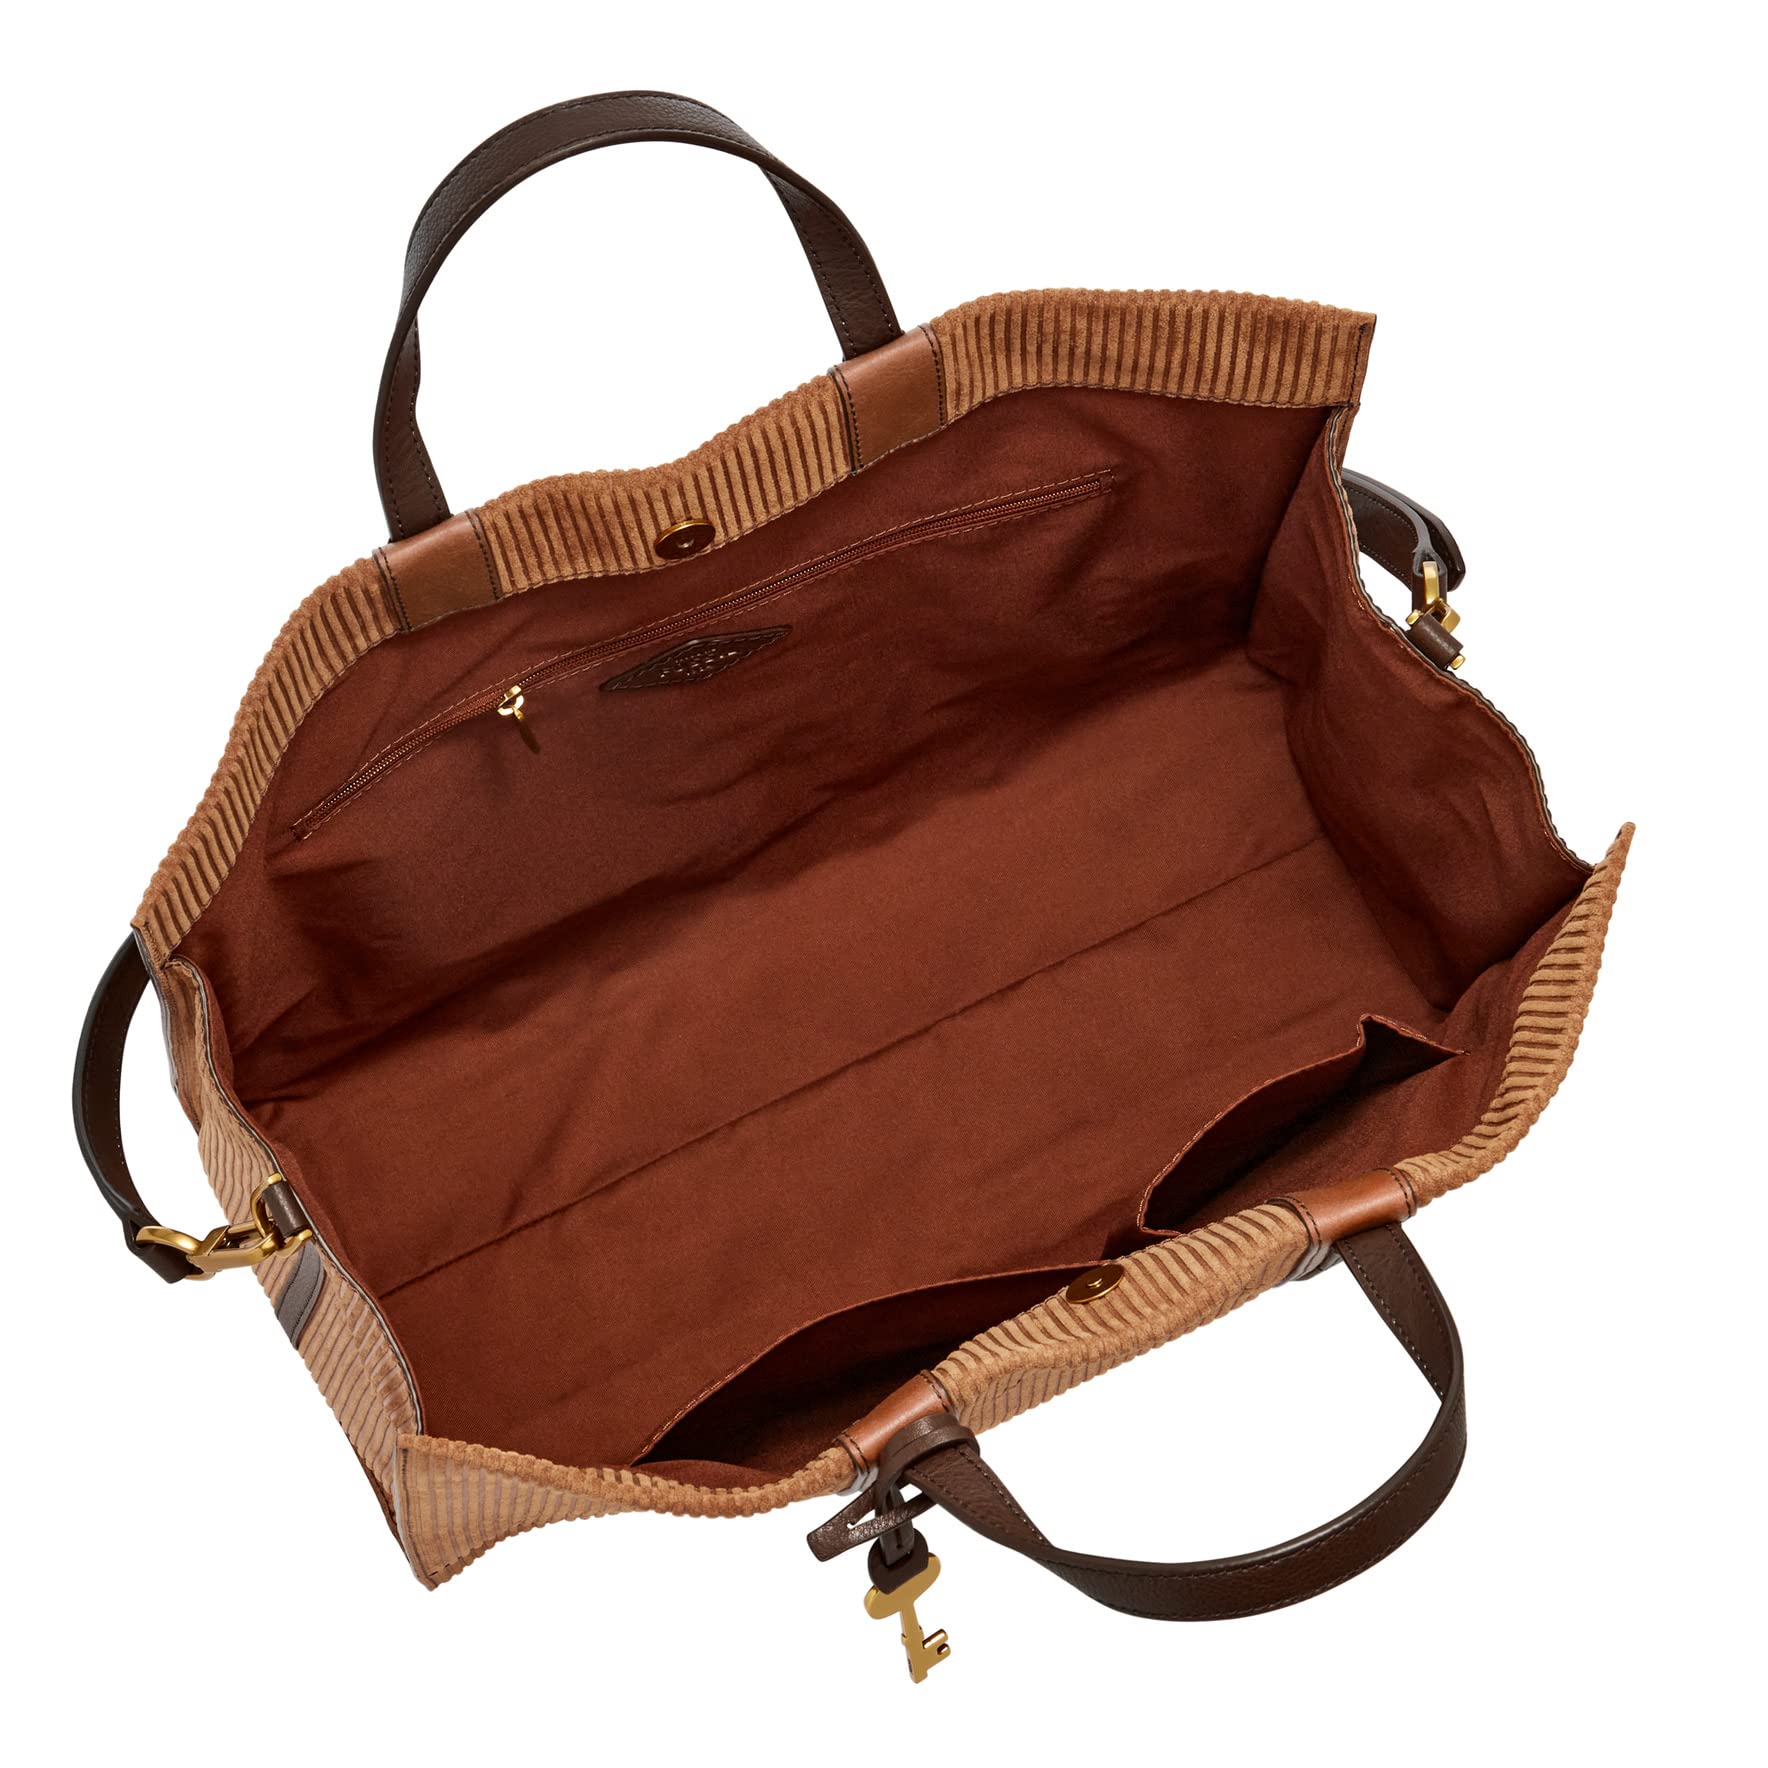 Fossil Women's Carmen Leather Tote Purse Handbag for Women